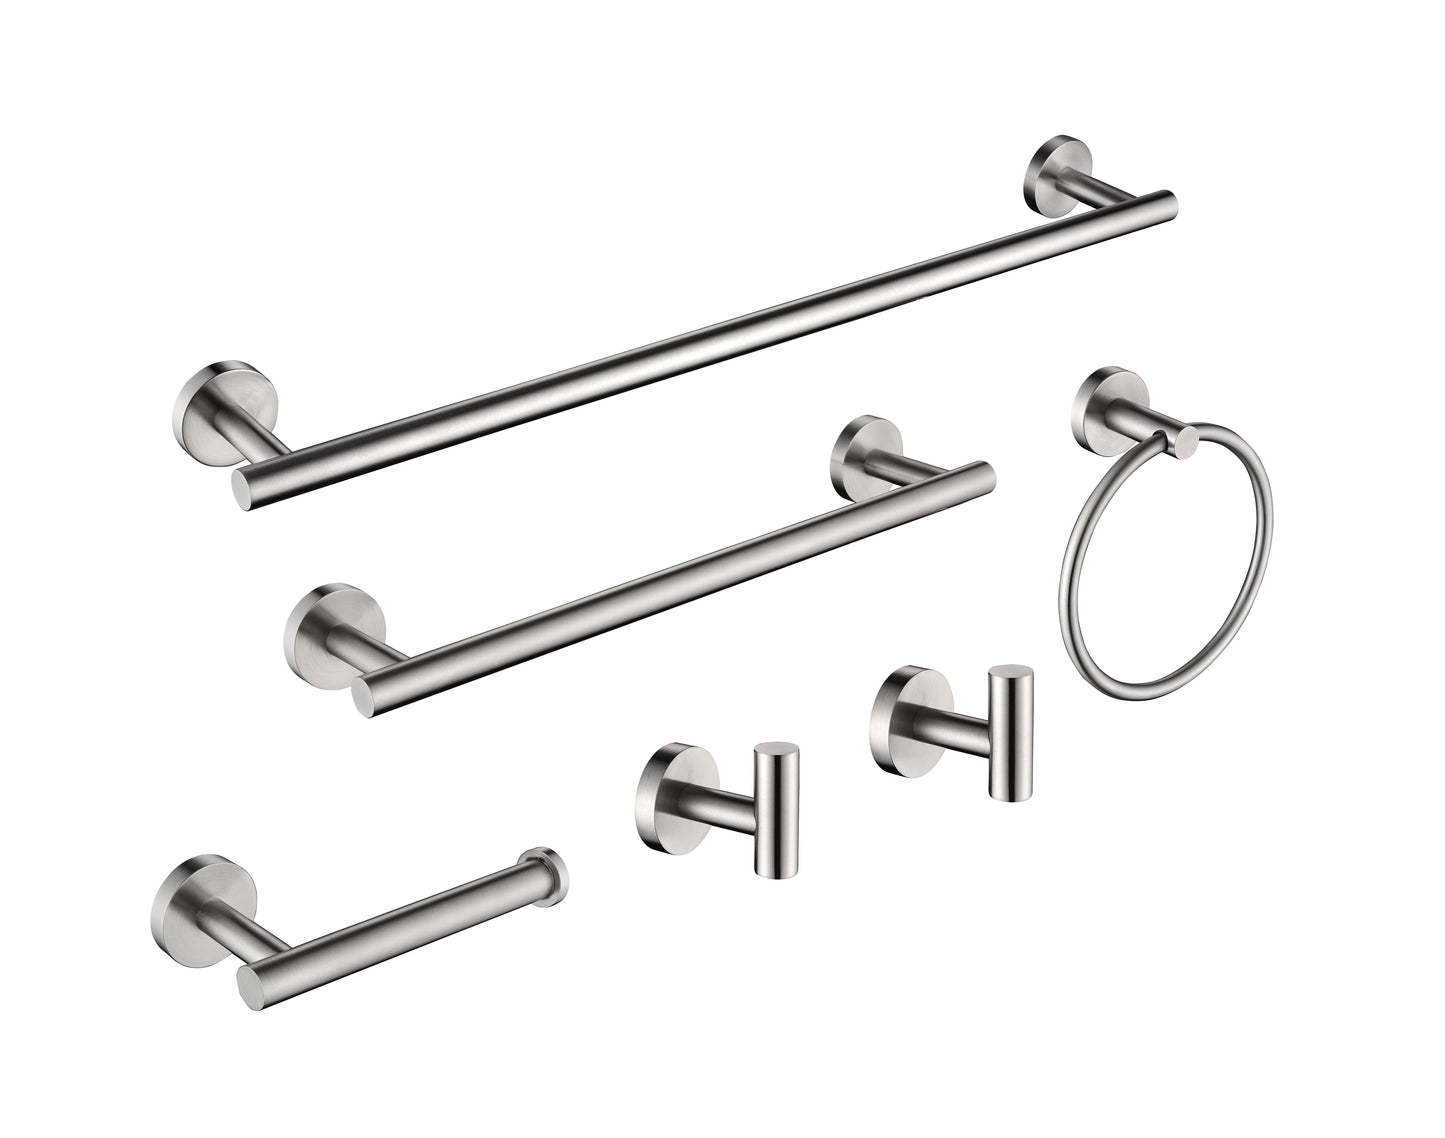 Waterpar®6-Piece Bath Hardware Set, Towel Bar, Toilet Paper Holder, Towel Hook in Brushed Nickel